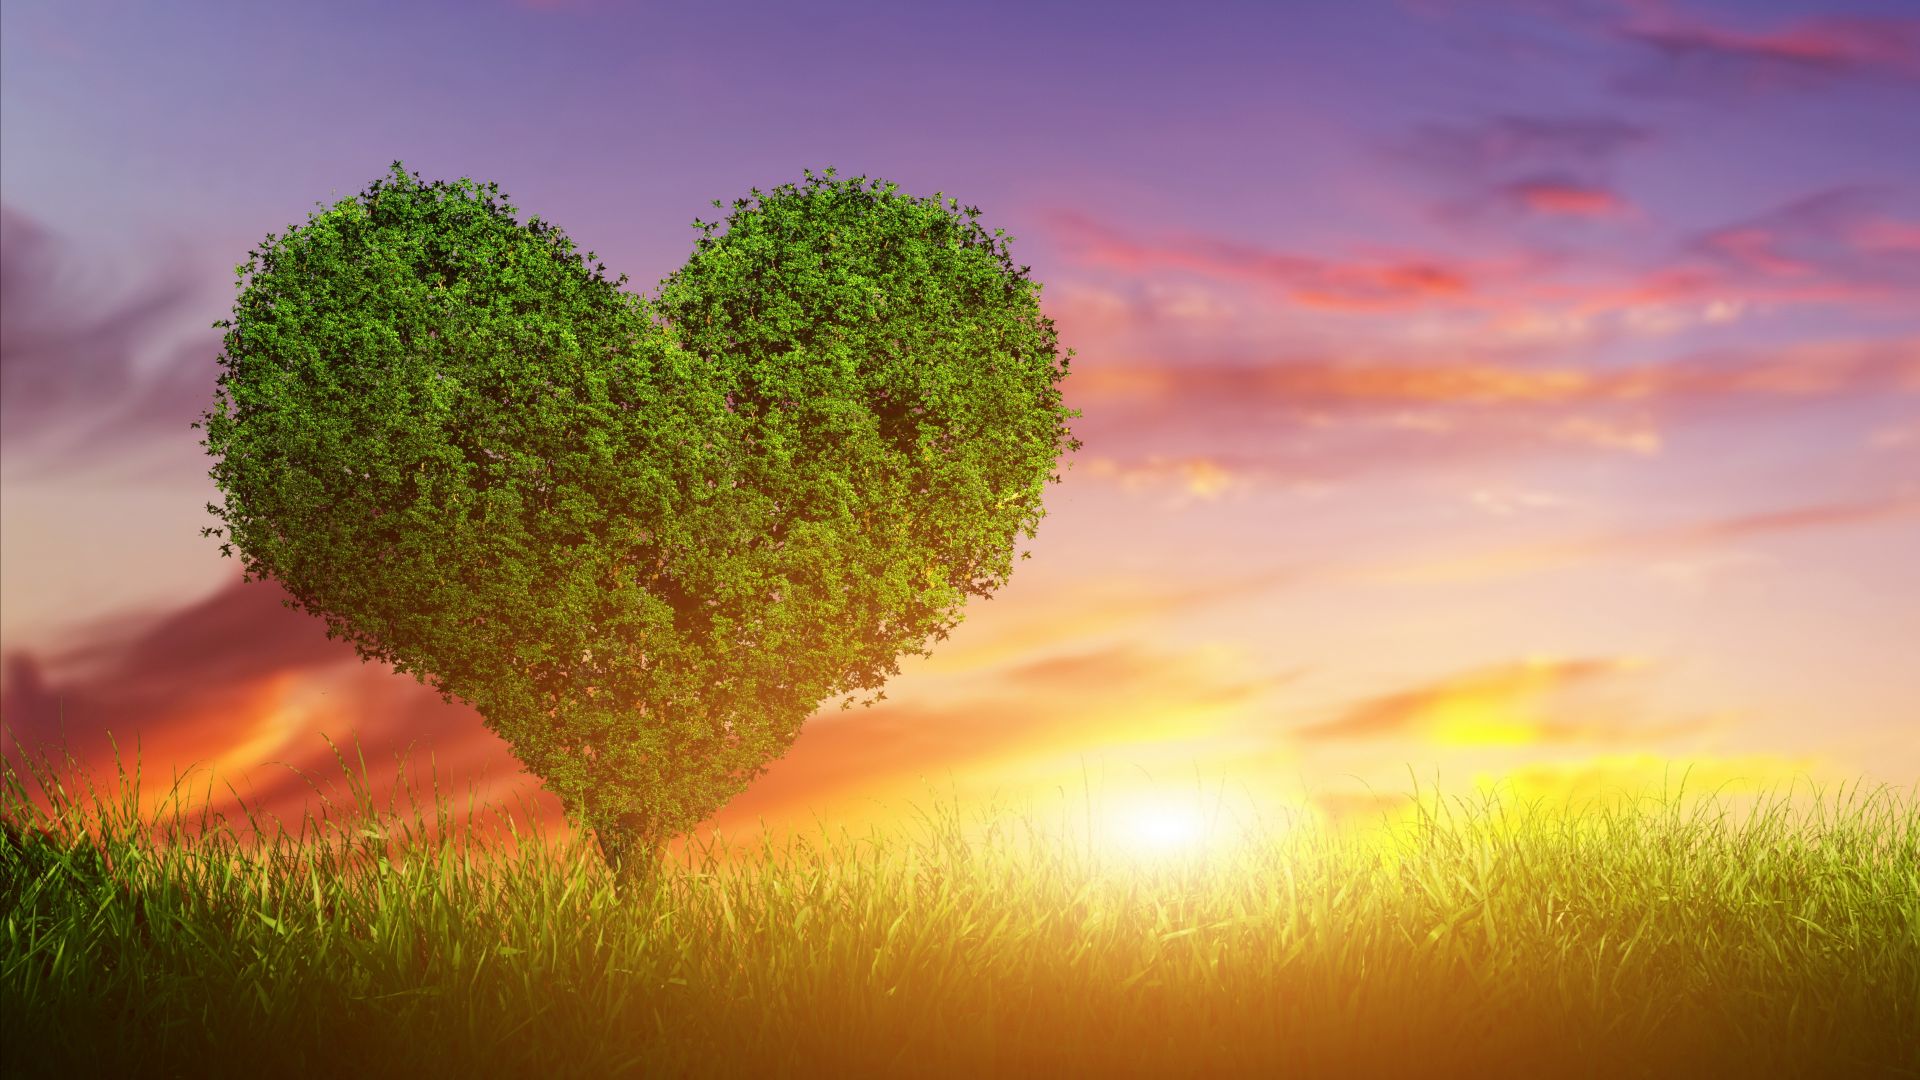 фото любовь, сердце, love image, heart, tree, 5k (horizontal)